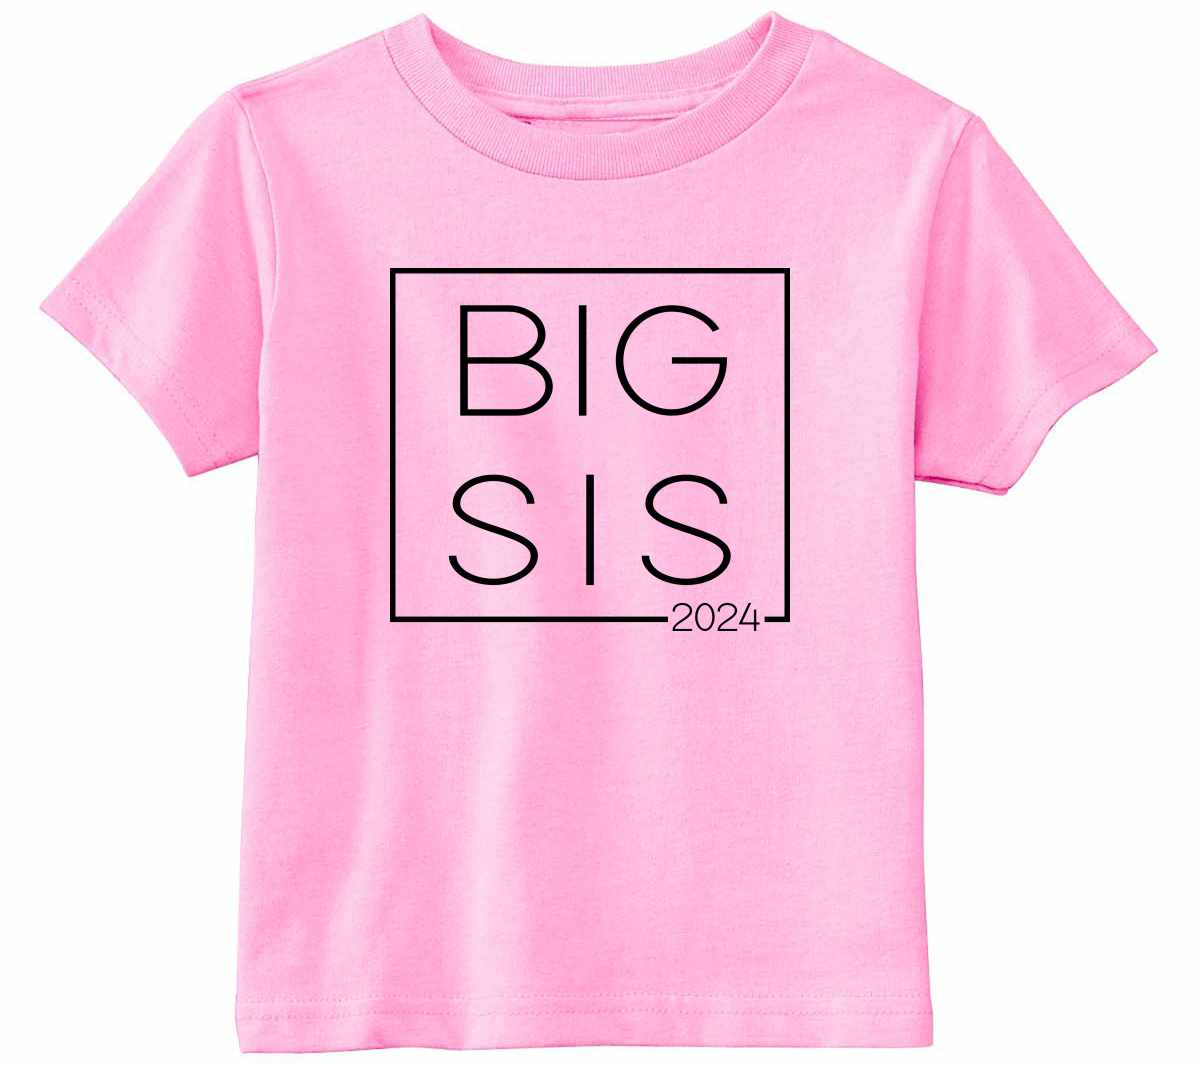 Big Sis 2024 - Big Sister Boxed on Infant-Toddler T-Shirt (#1380-7)